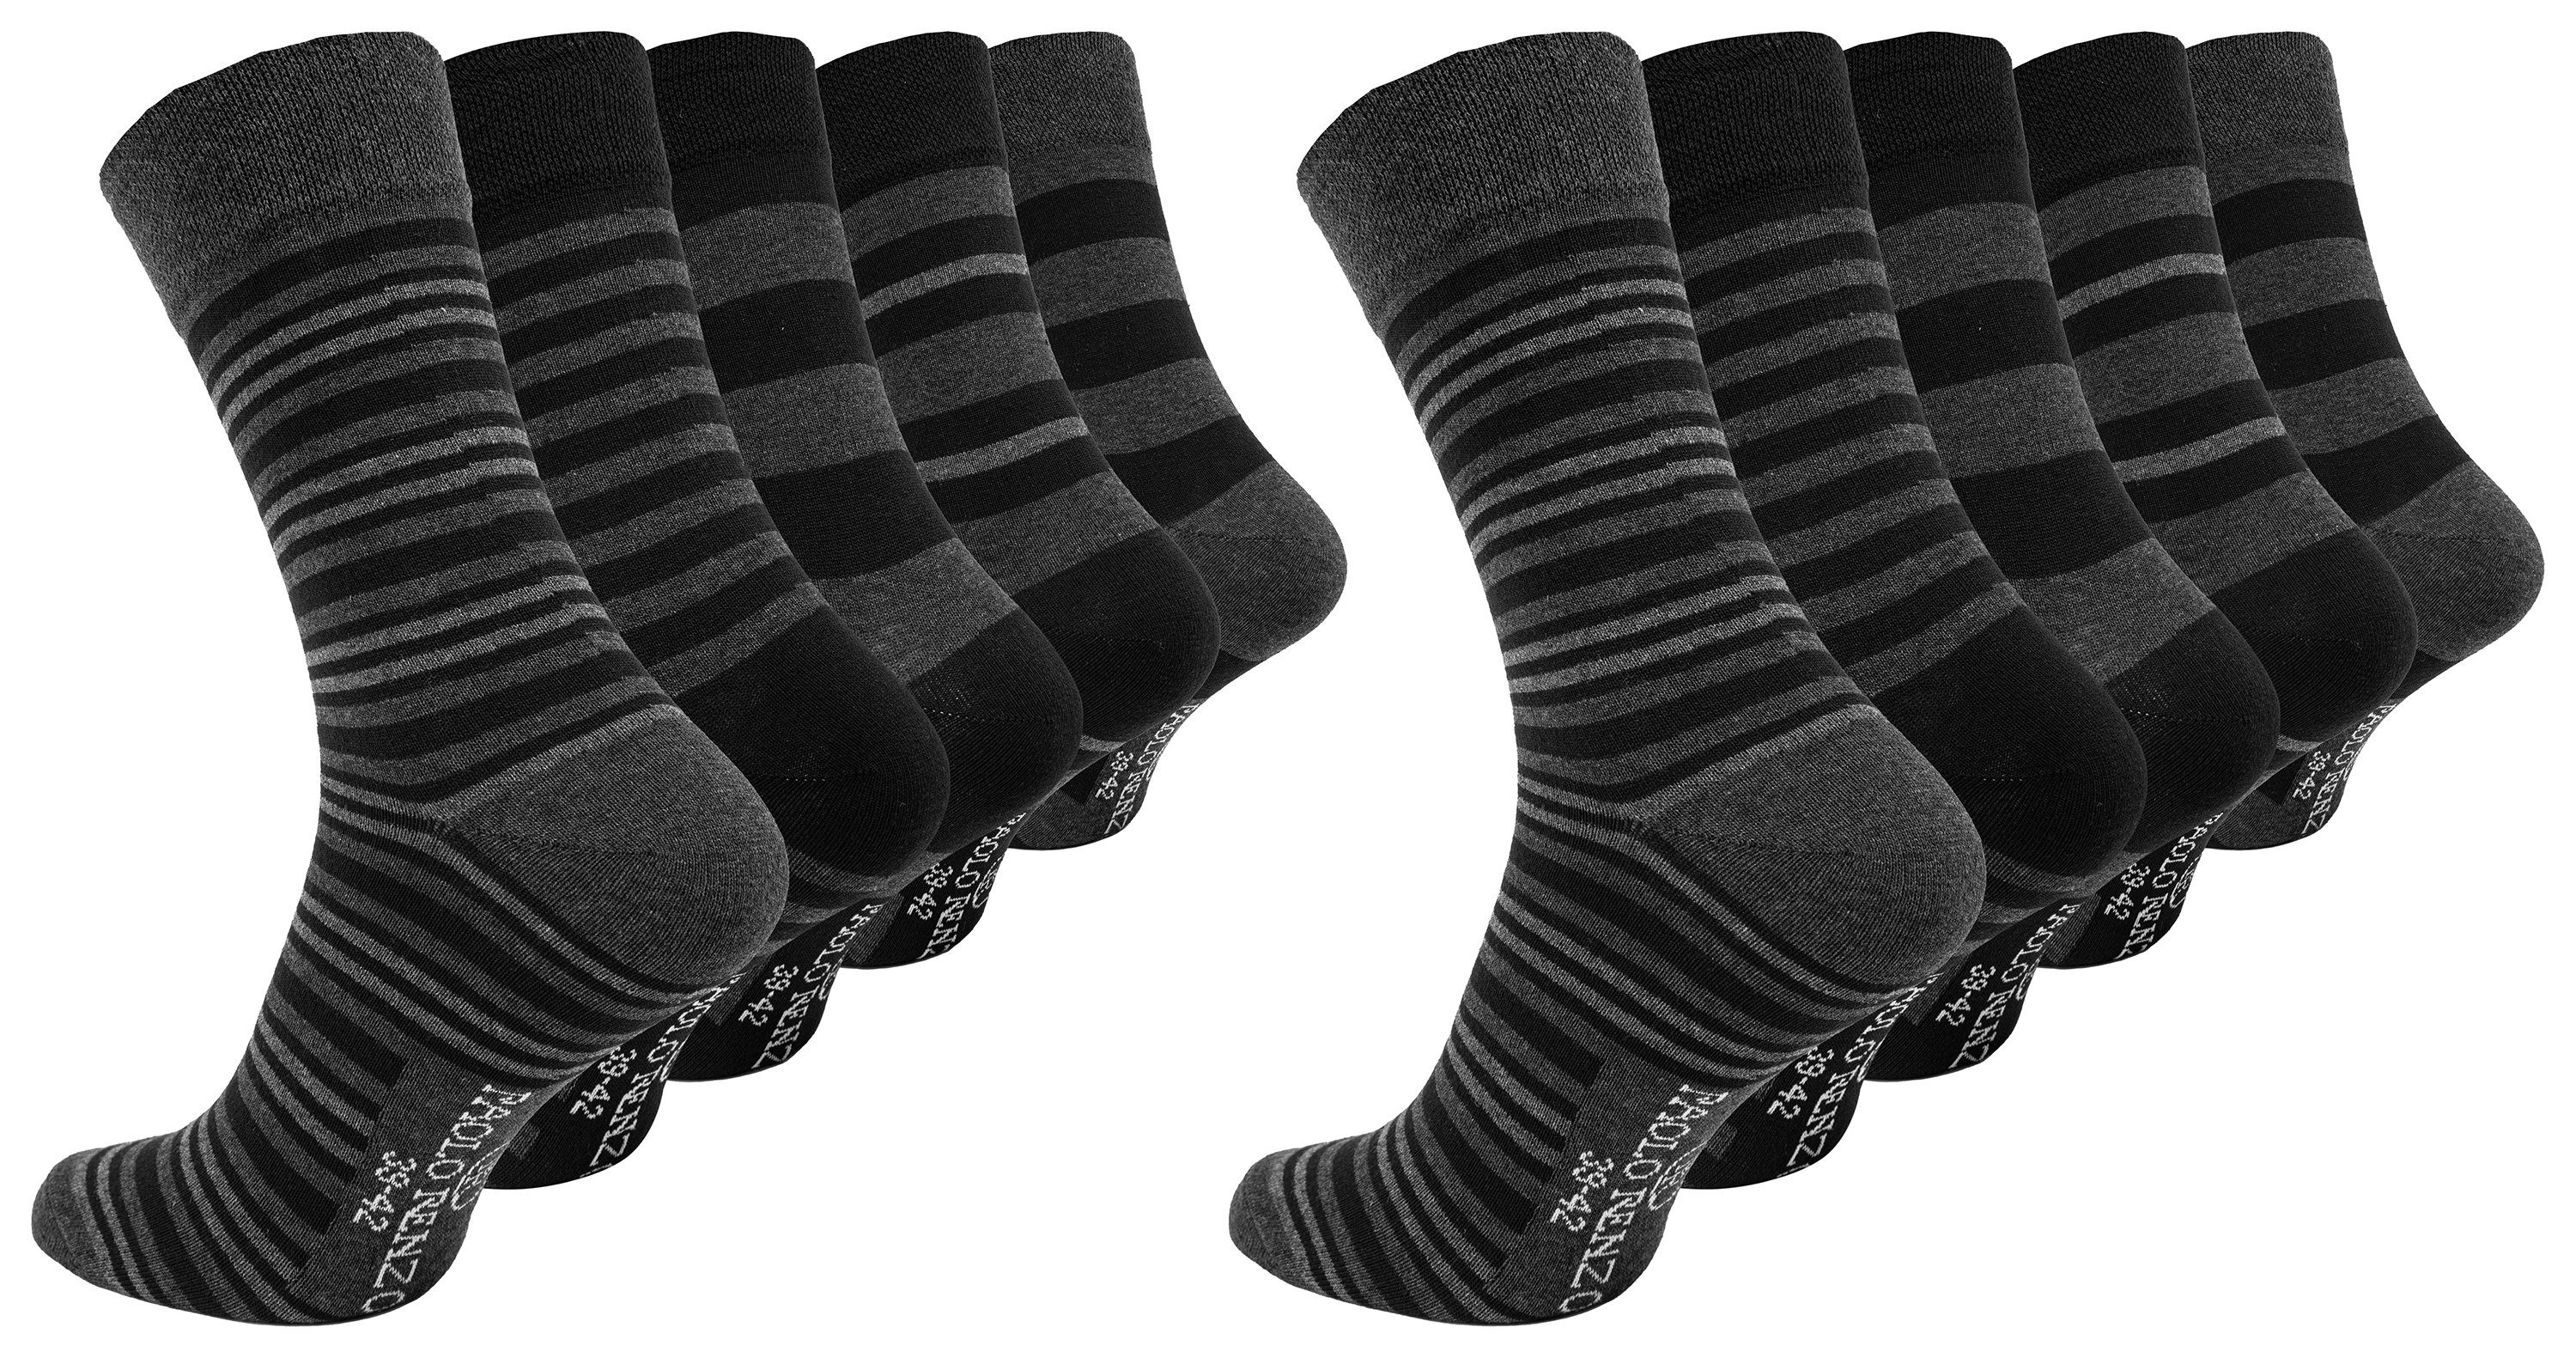 Paolo Renzo Businesssocken (10-Paar) Atmungsaktive Herren hochwertiger Business Socken Baumwolle aus